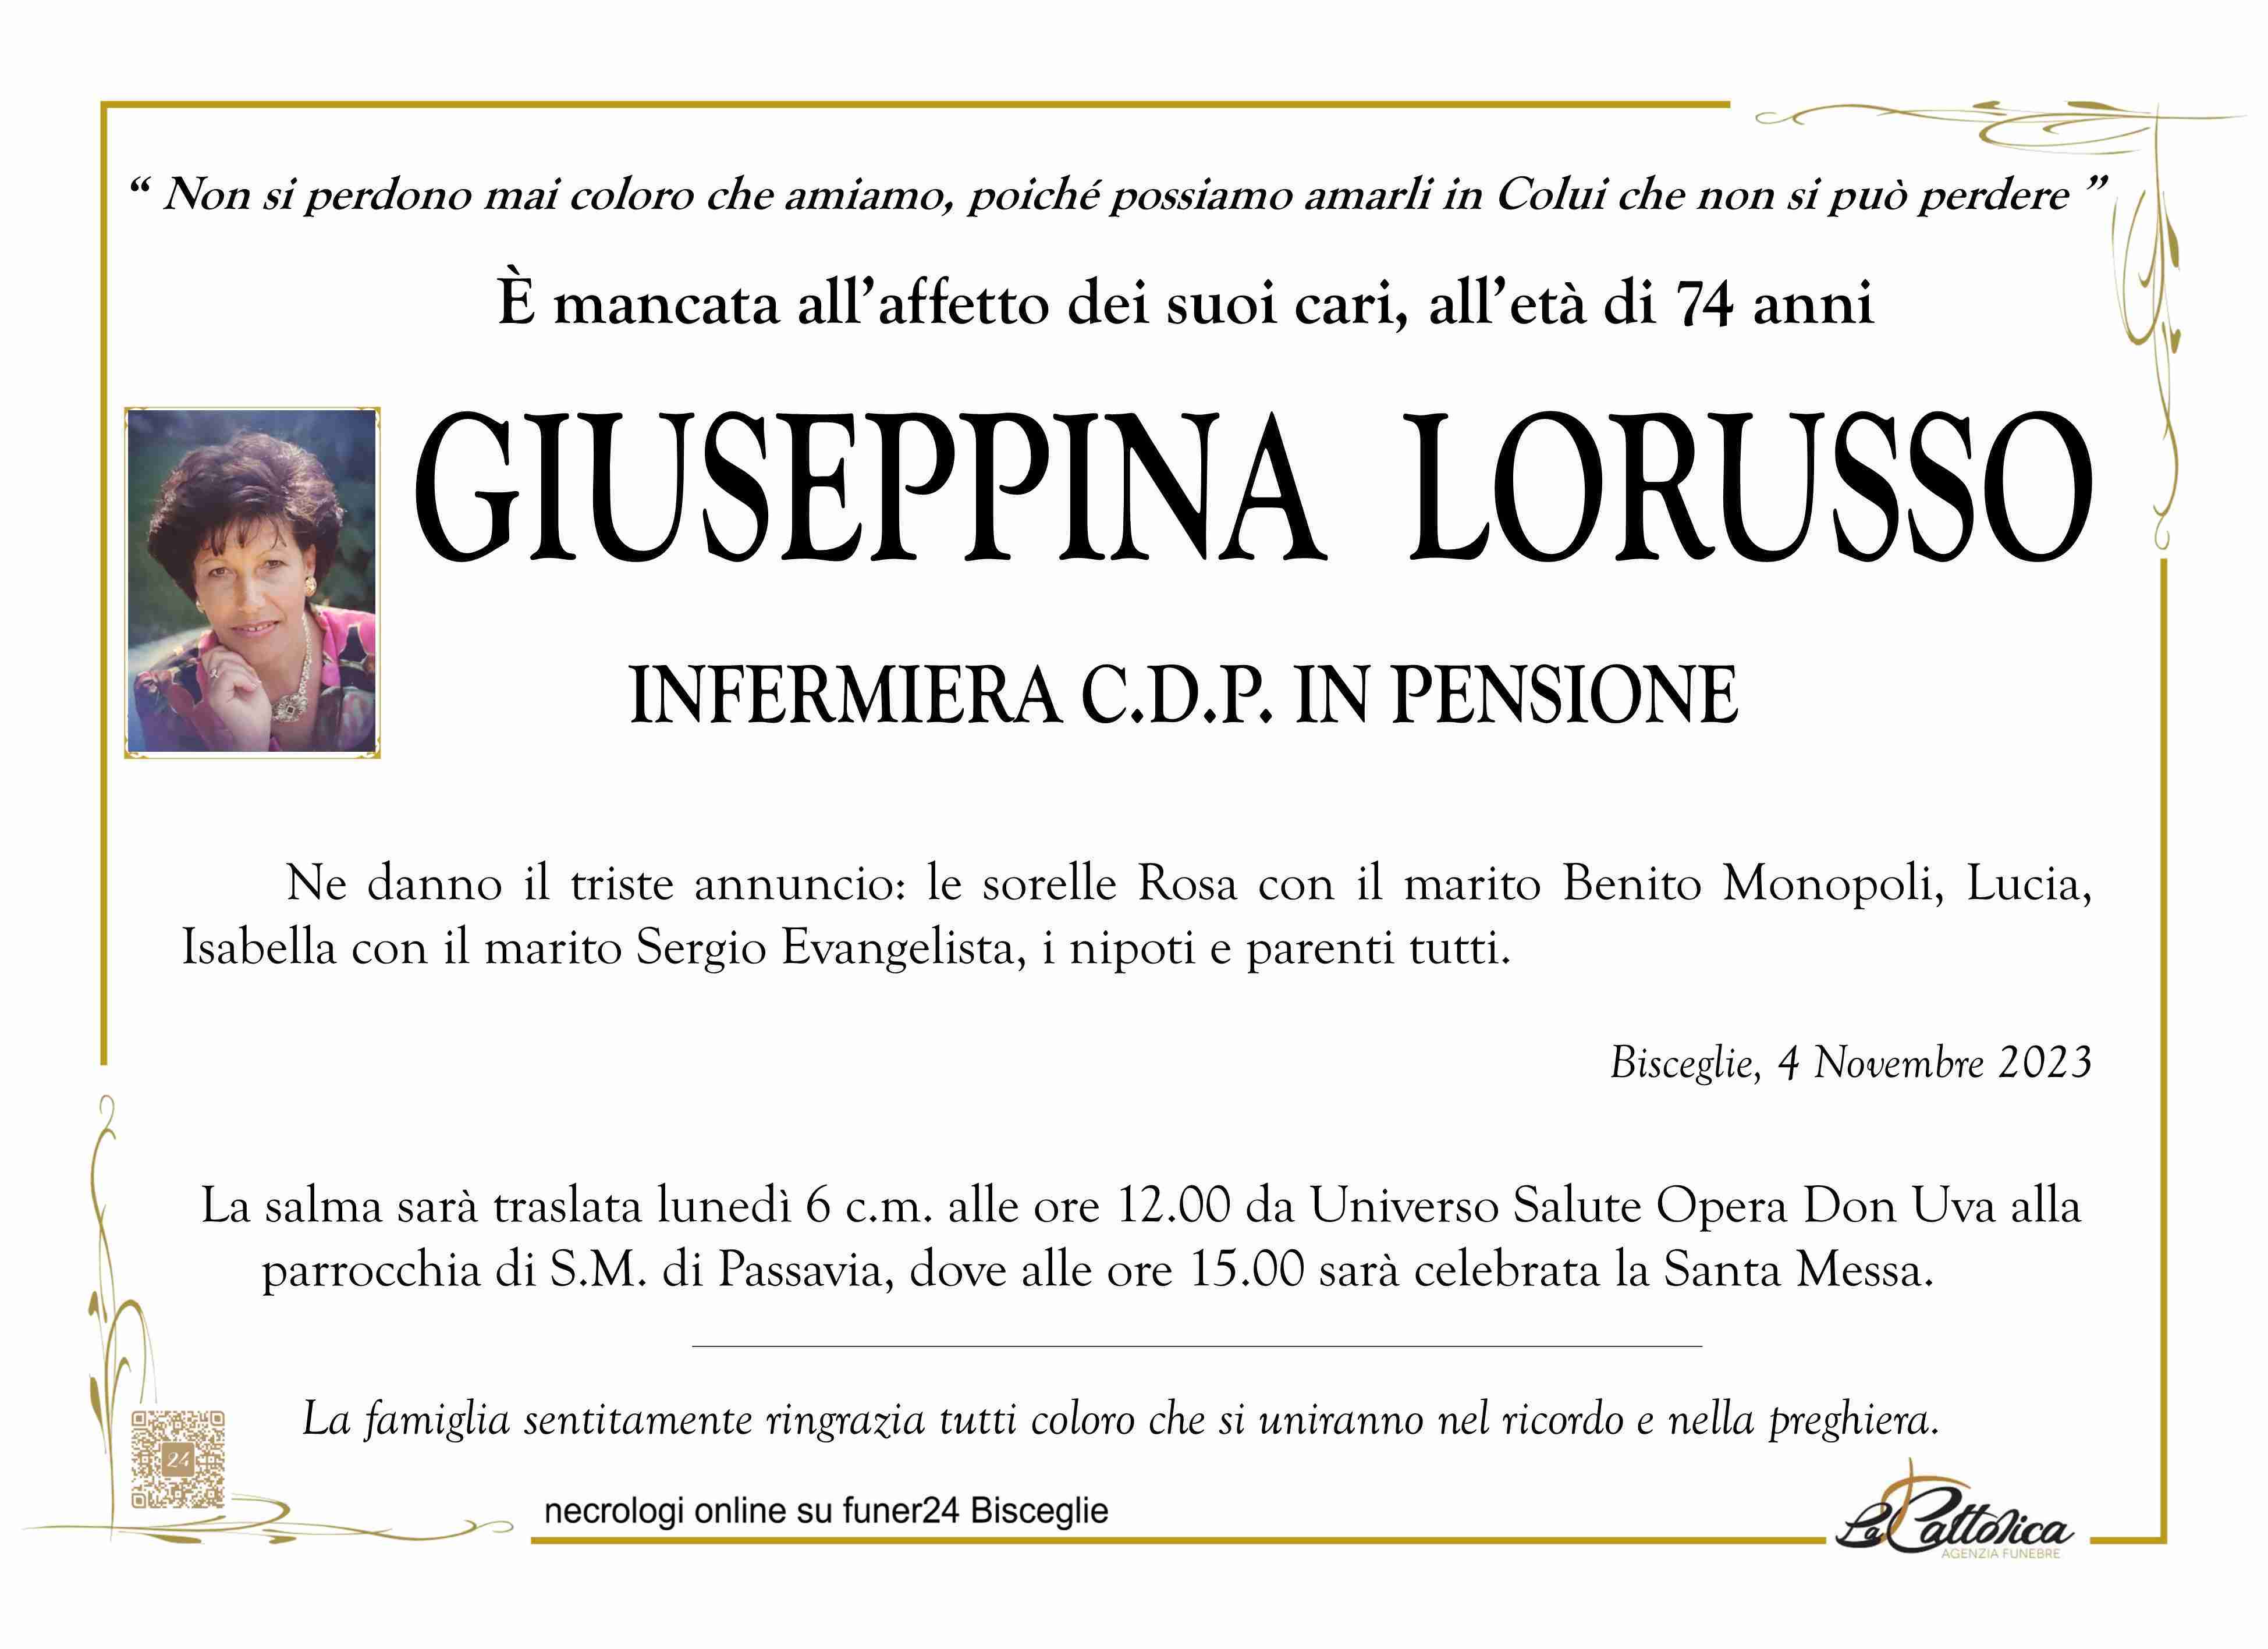 Giuseppina Lorusso